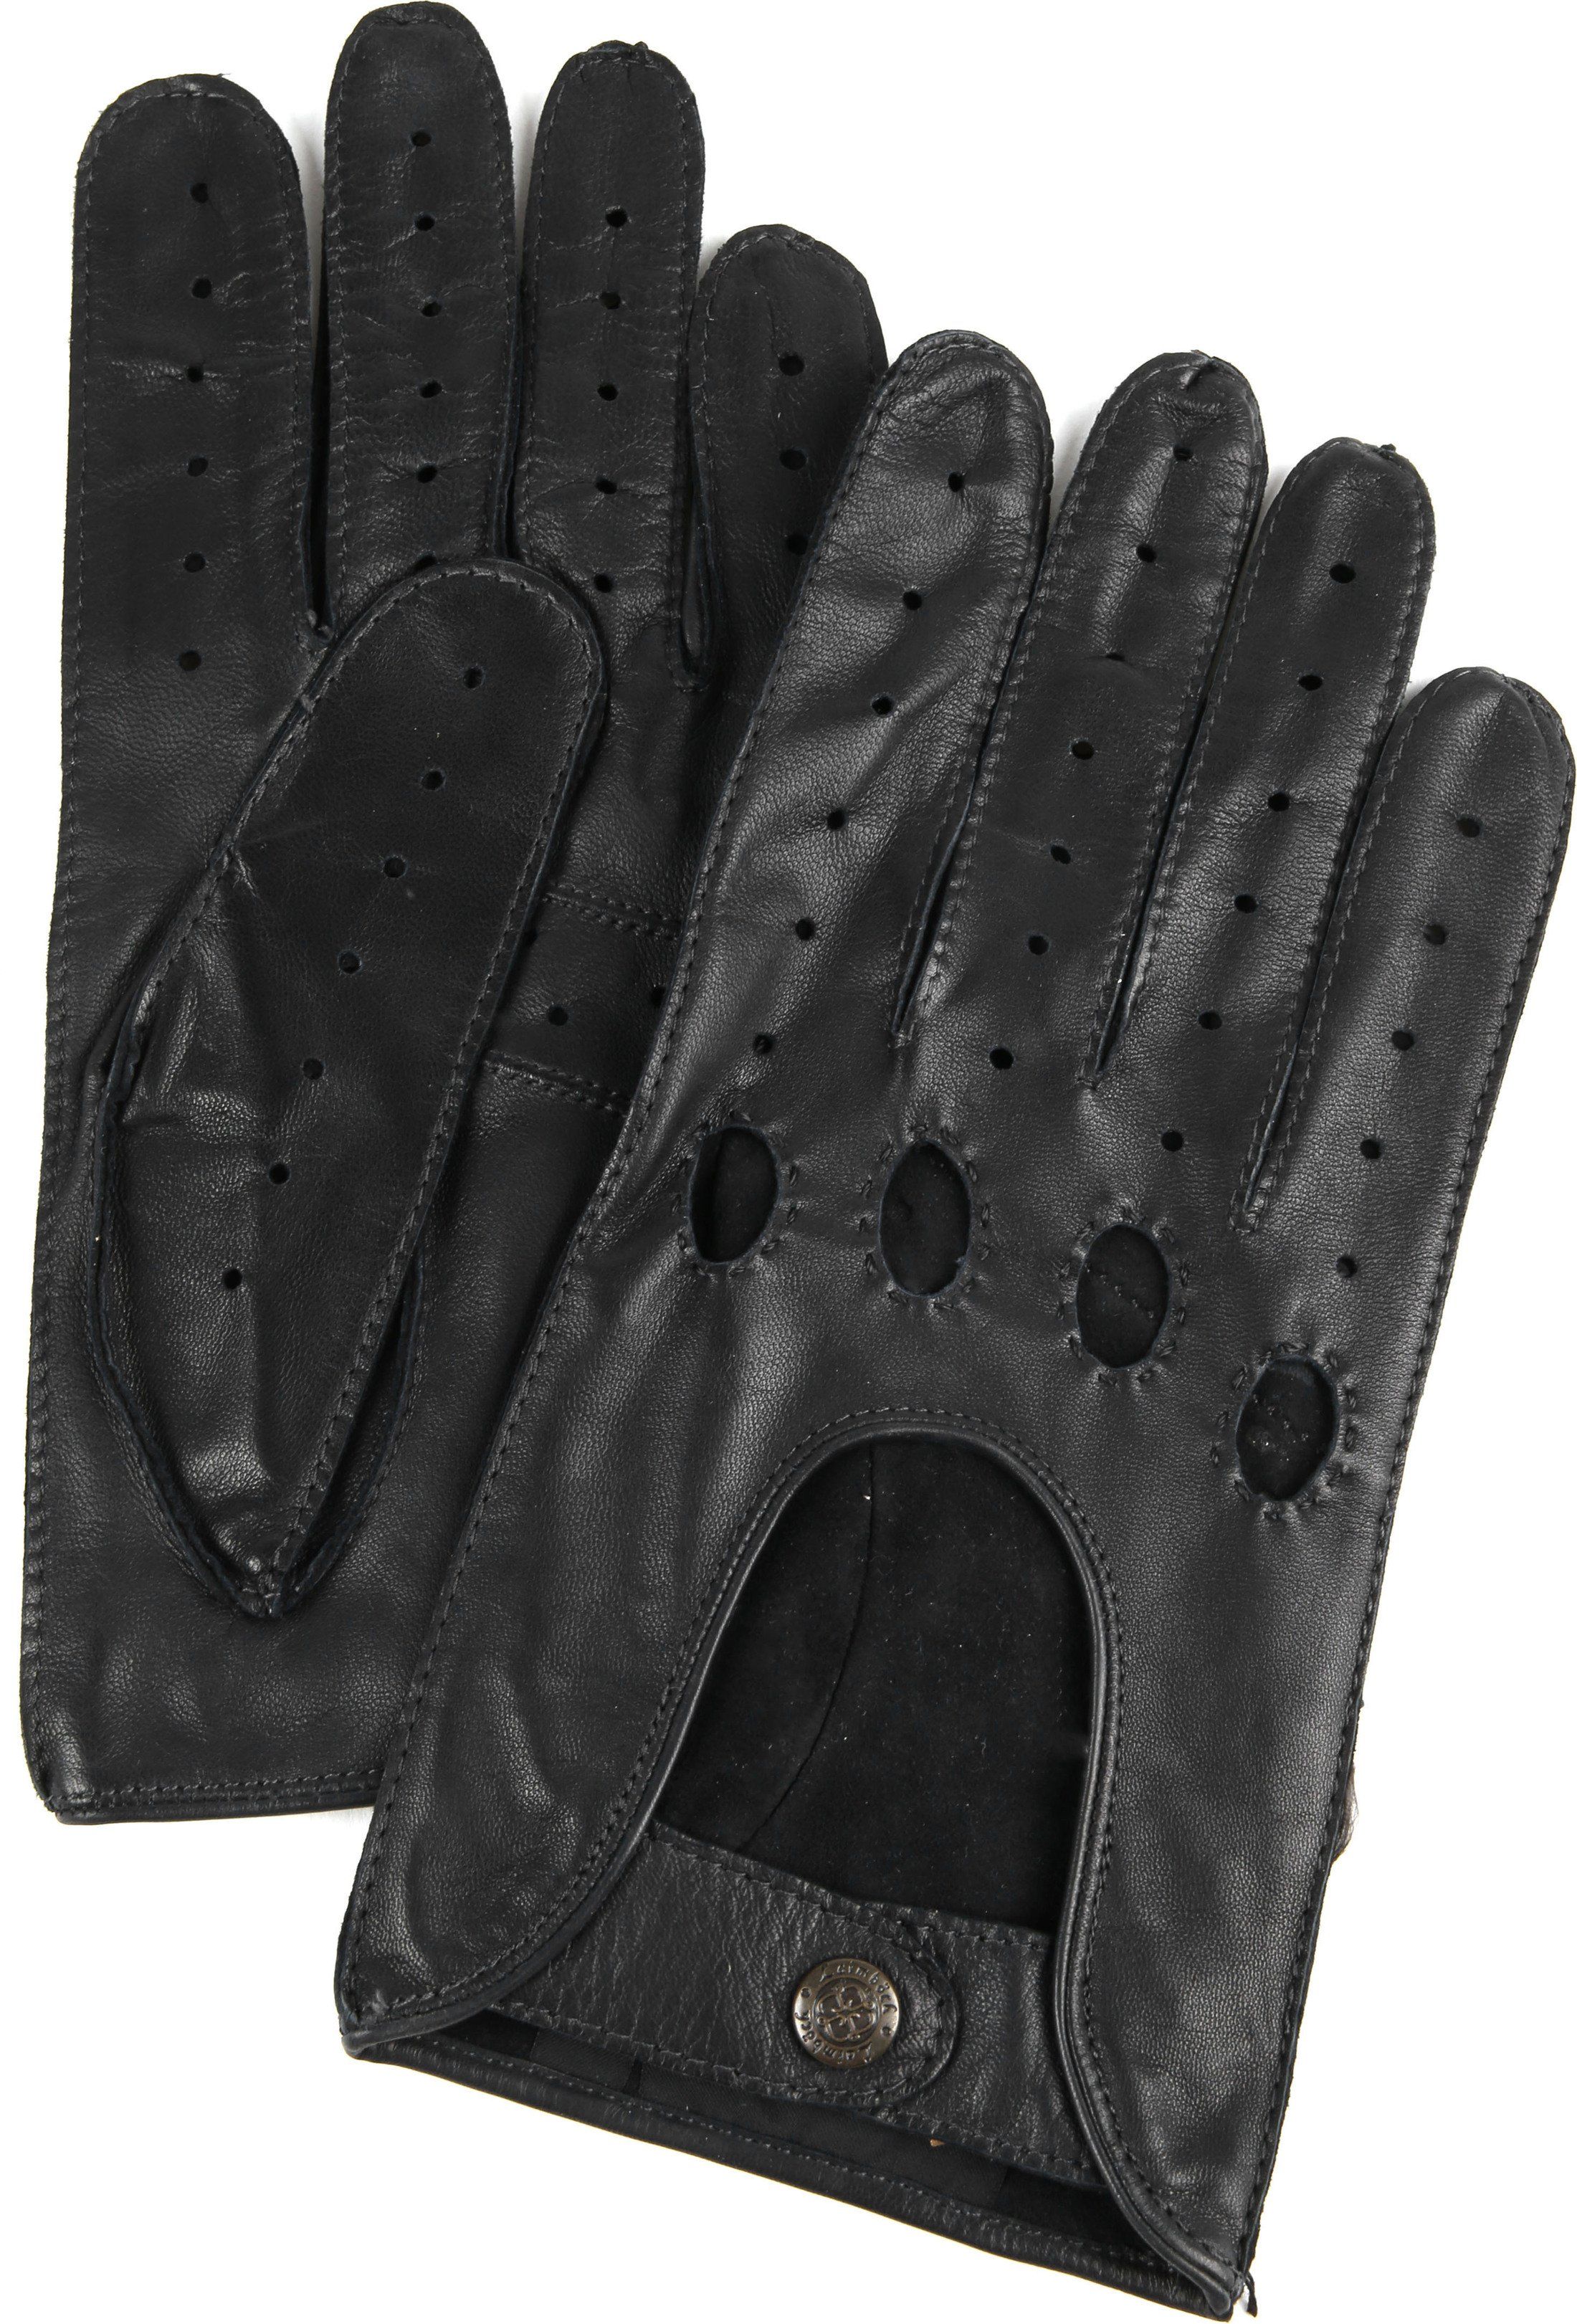 Laimbock Car Gloves Miami Black size 10